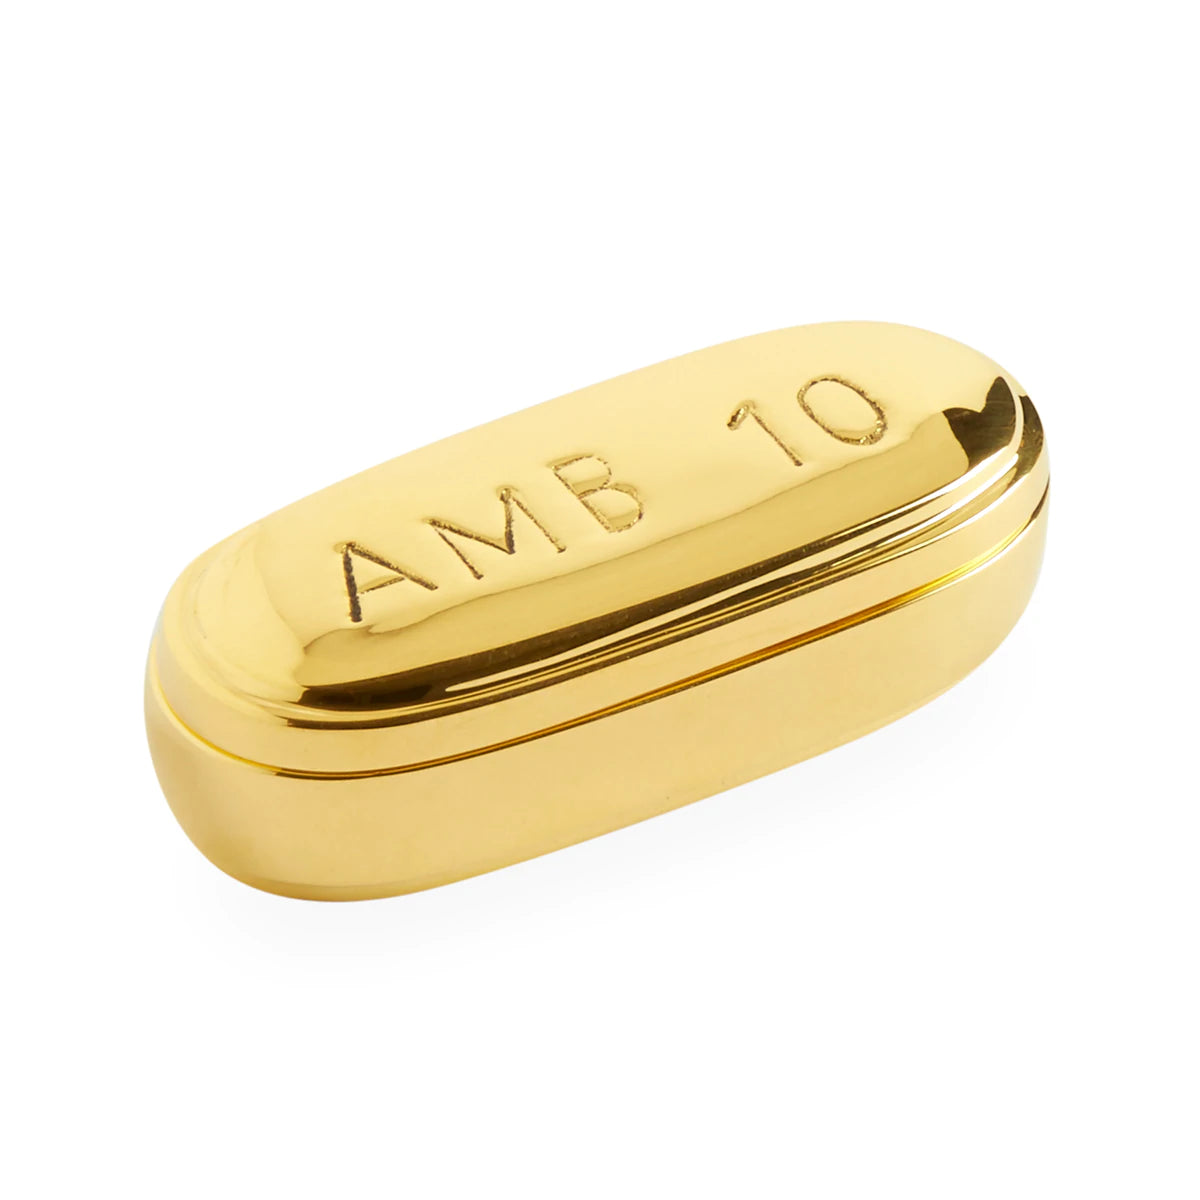 Ambien Pill Box by Jonathan Adler